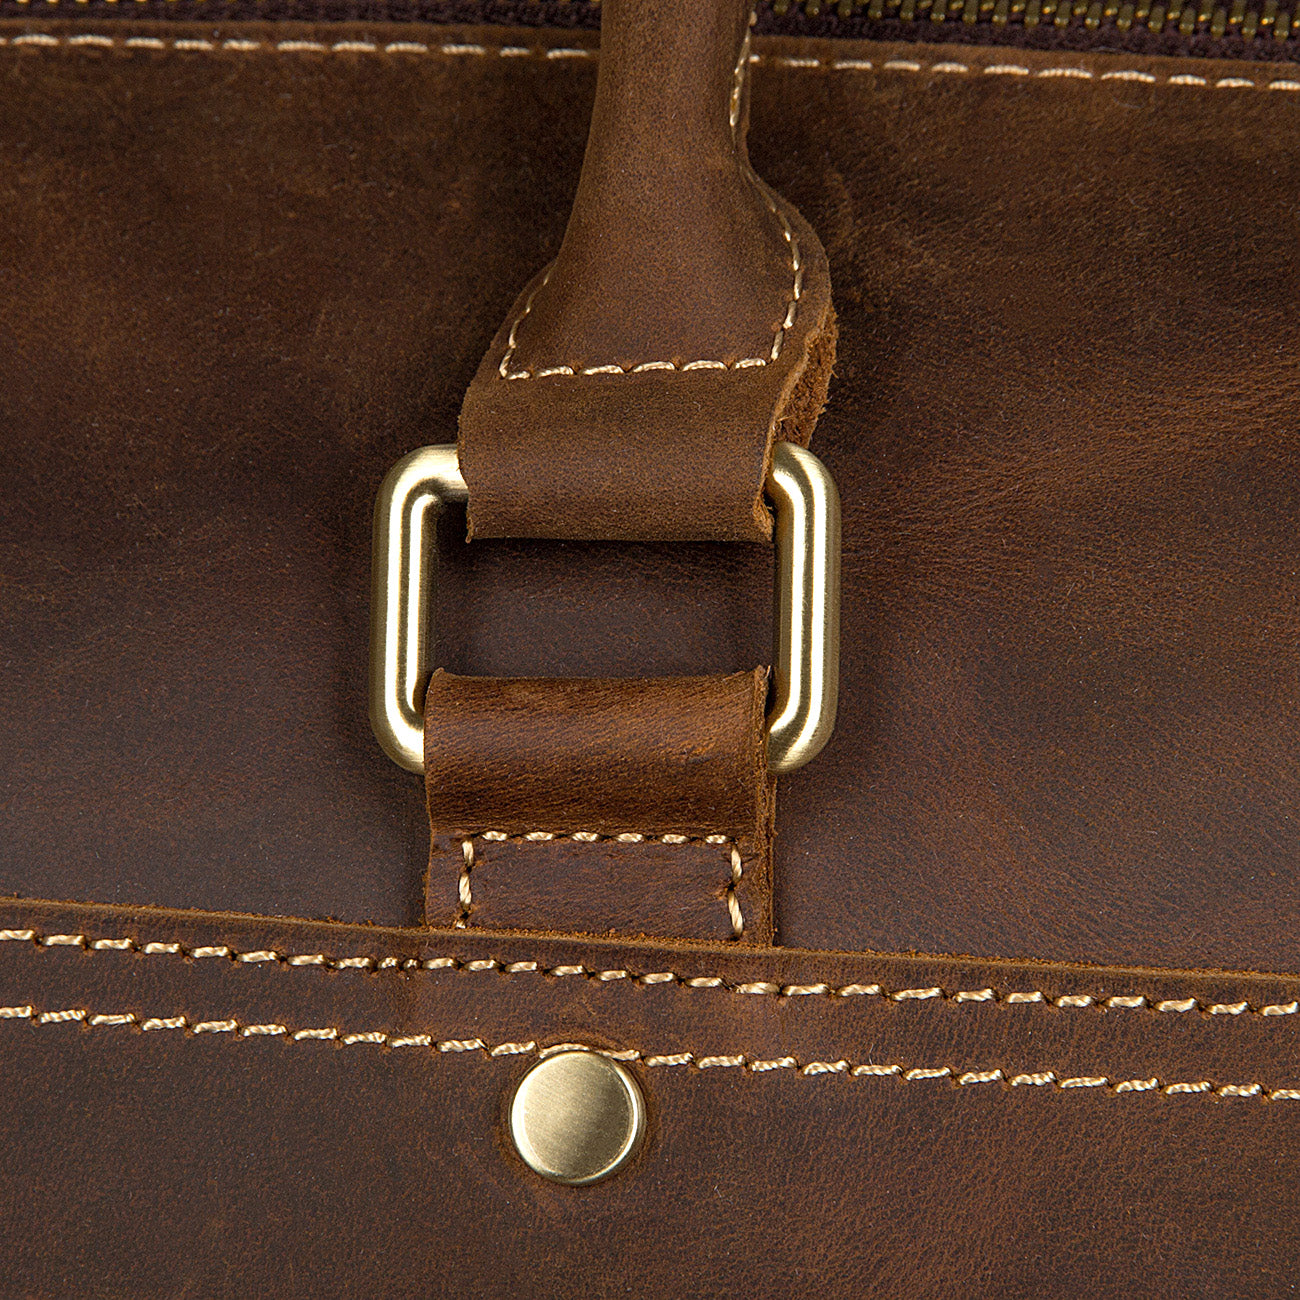 Men's Leather Duffle Bag, Anniversary Gift, Handmade Leather Weekender Bag, Larger Travel Outdoor Bag